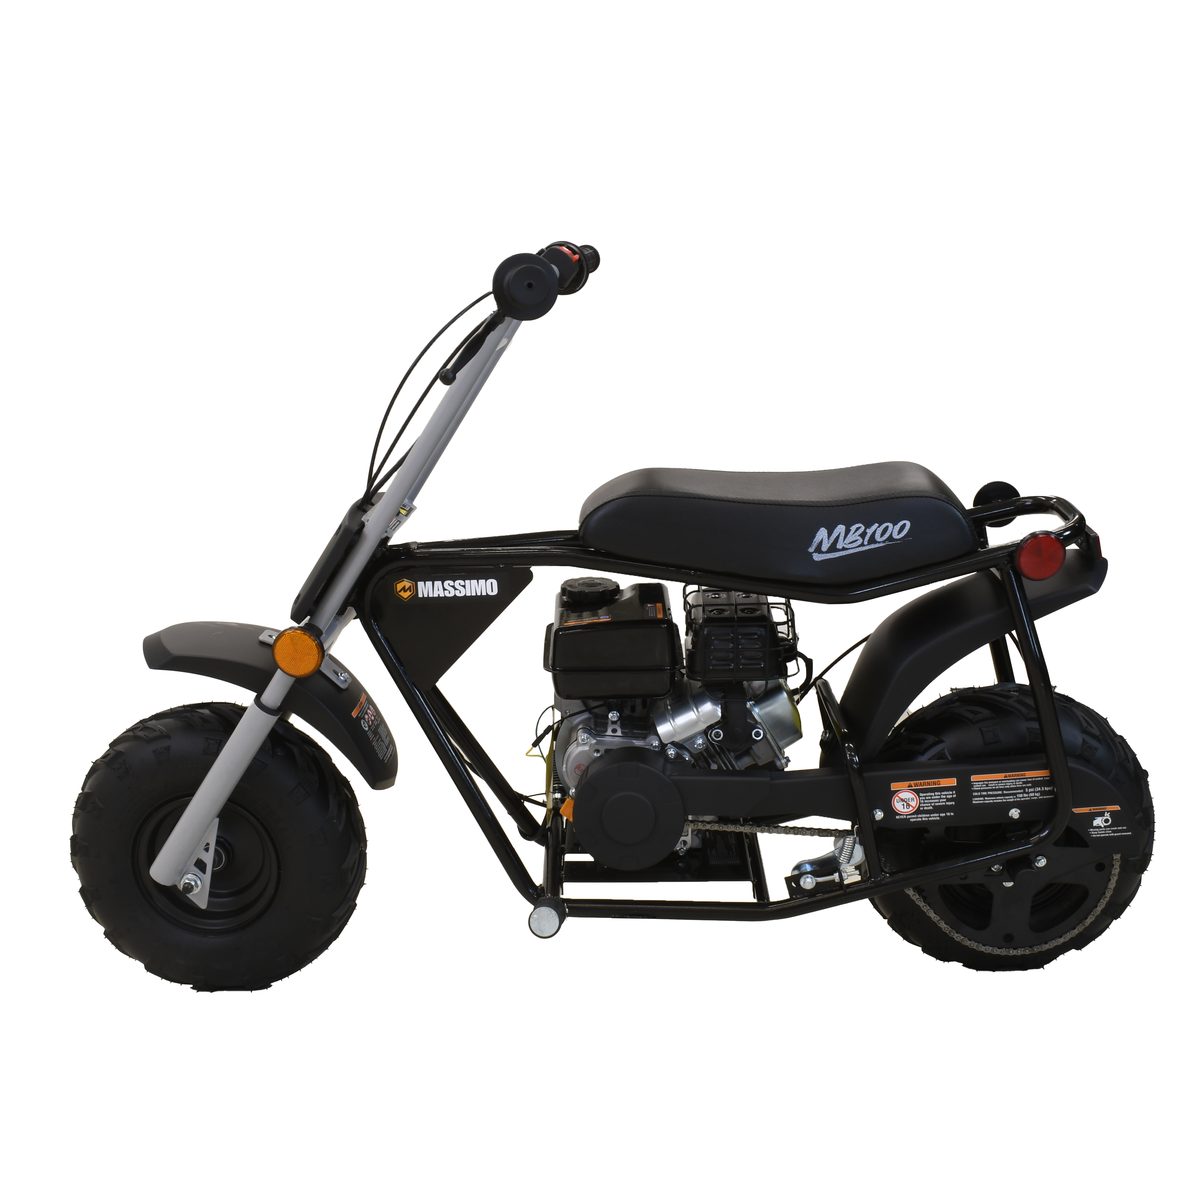 Massimo Motor MB100 2.5 HP 79cc 4-Stroke Gas Powered Mini Bike Motorcycle Trail Bike (Black) - image 4 of 8